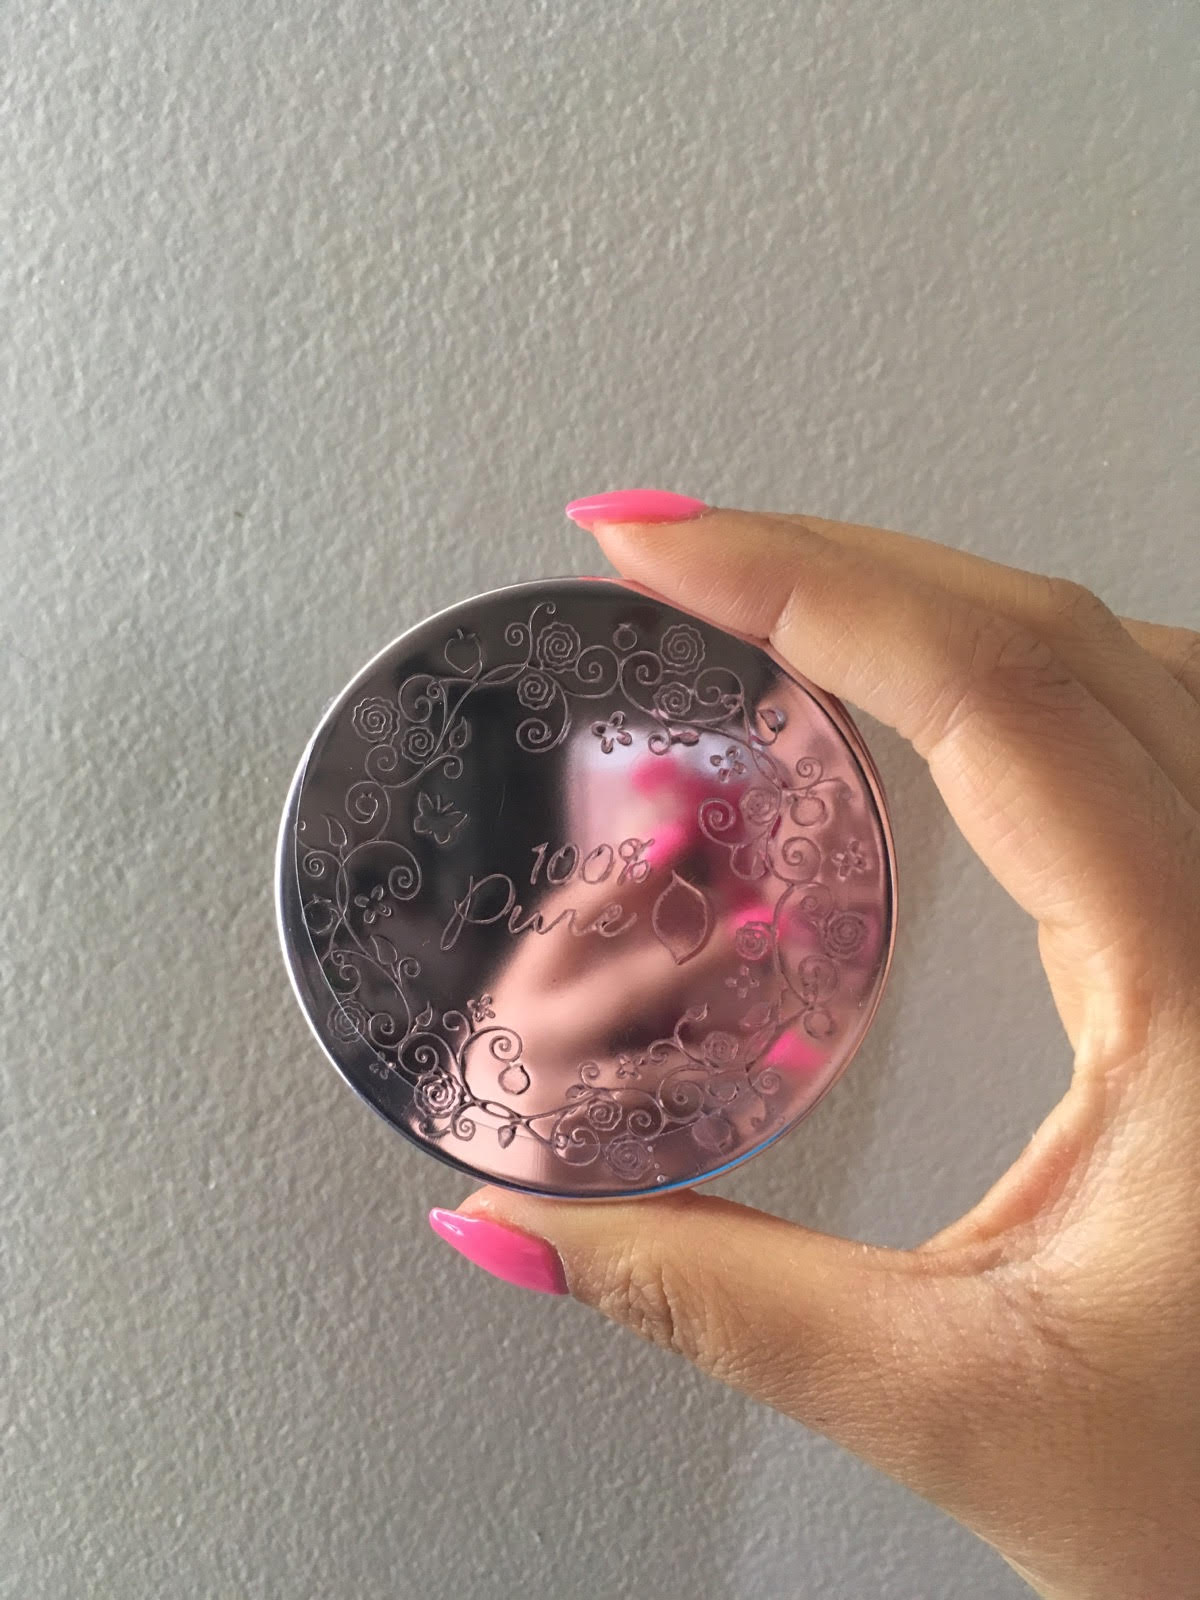 100% Pure Mimosa fruit pigmented powder blush (Brand new- sealed)